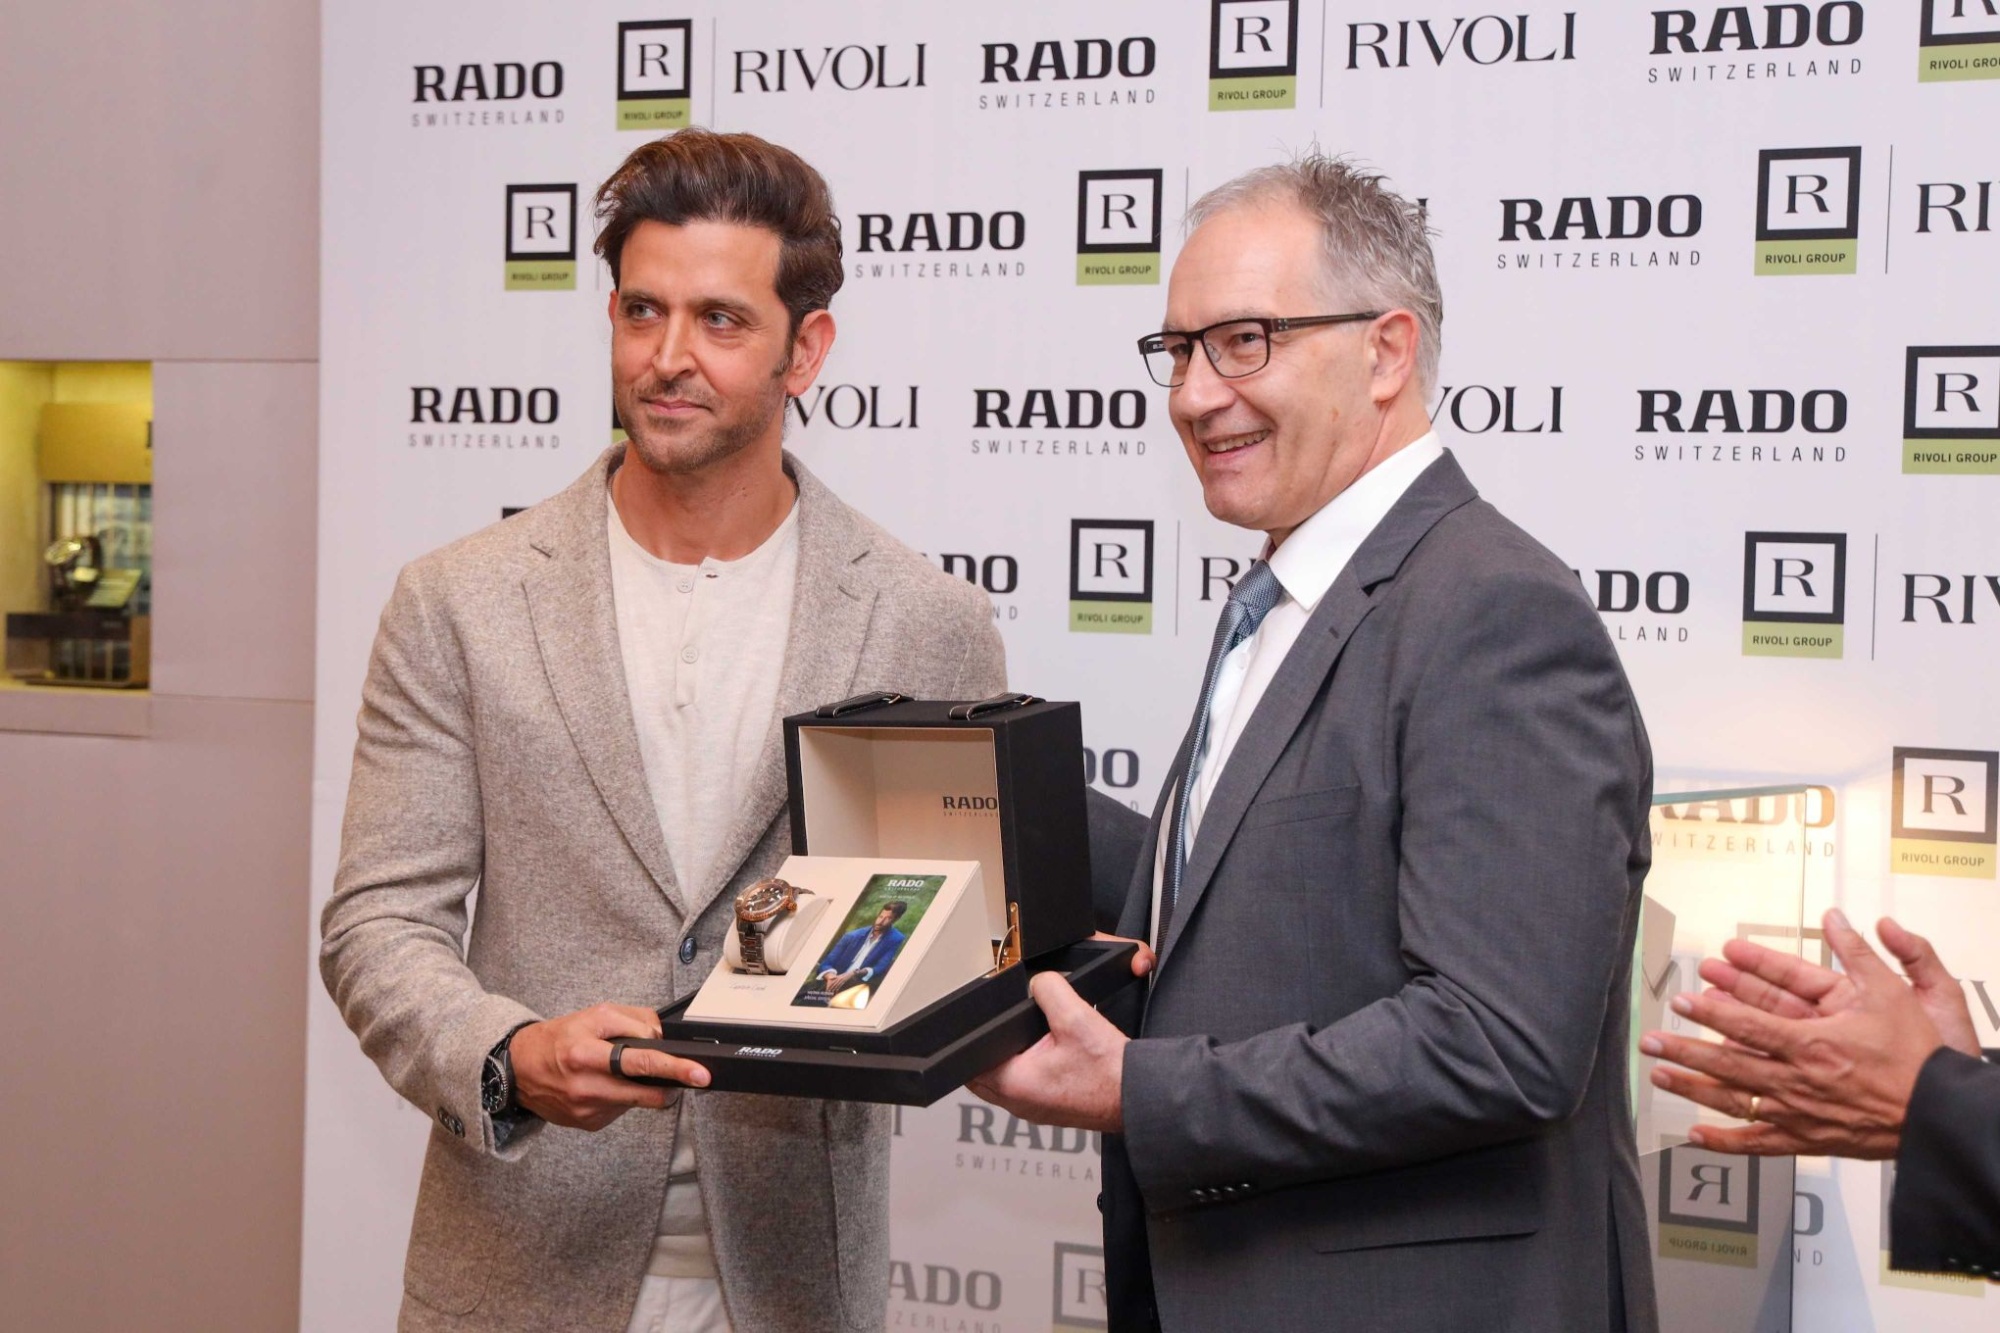 Bollywood Star Hrithik Roshan Unveils The New Rado Captain Cook High Tech Ceramic Special Edition Watch In Dubai